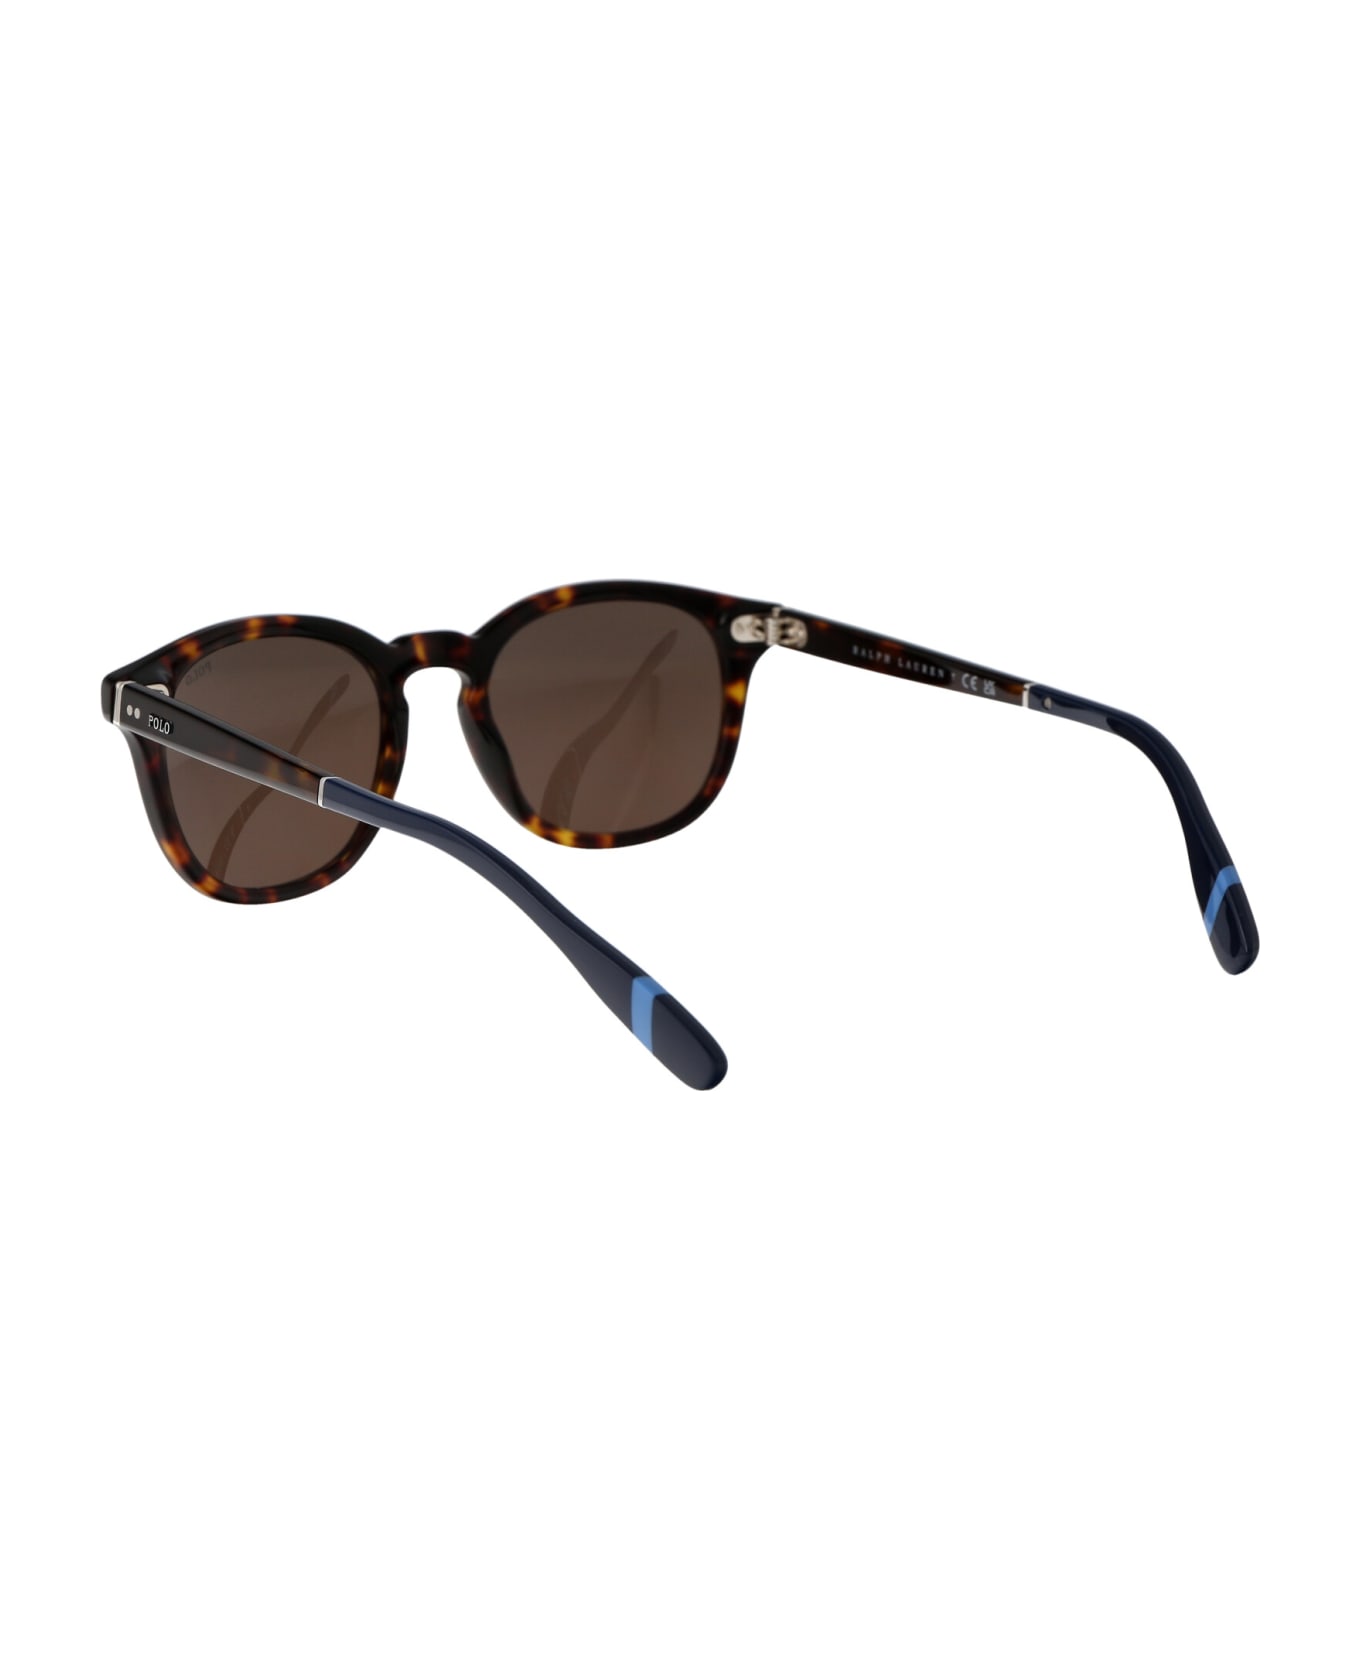 Polo Ralph Lauren 0ph4206 Sunglasses - 500373 Shiny Dark Havana